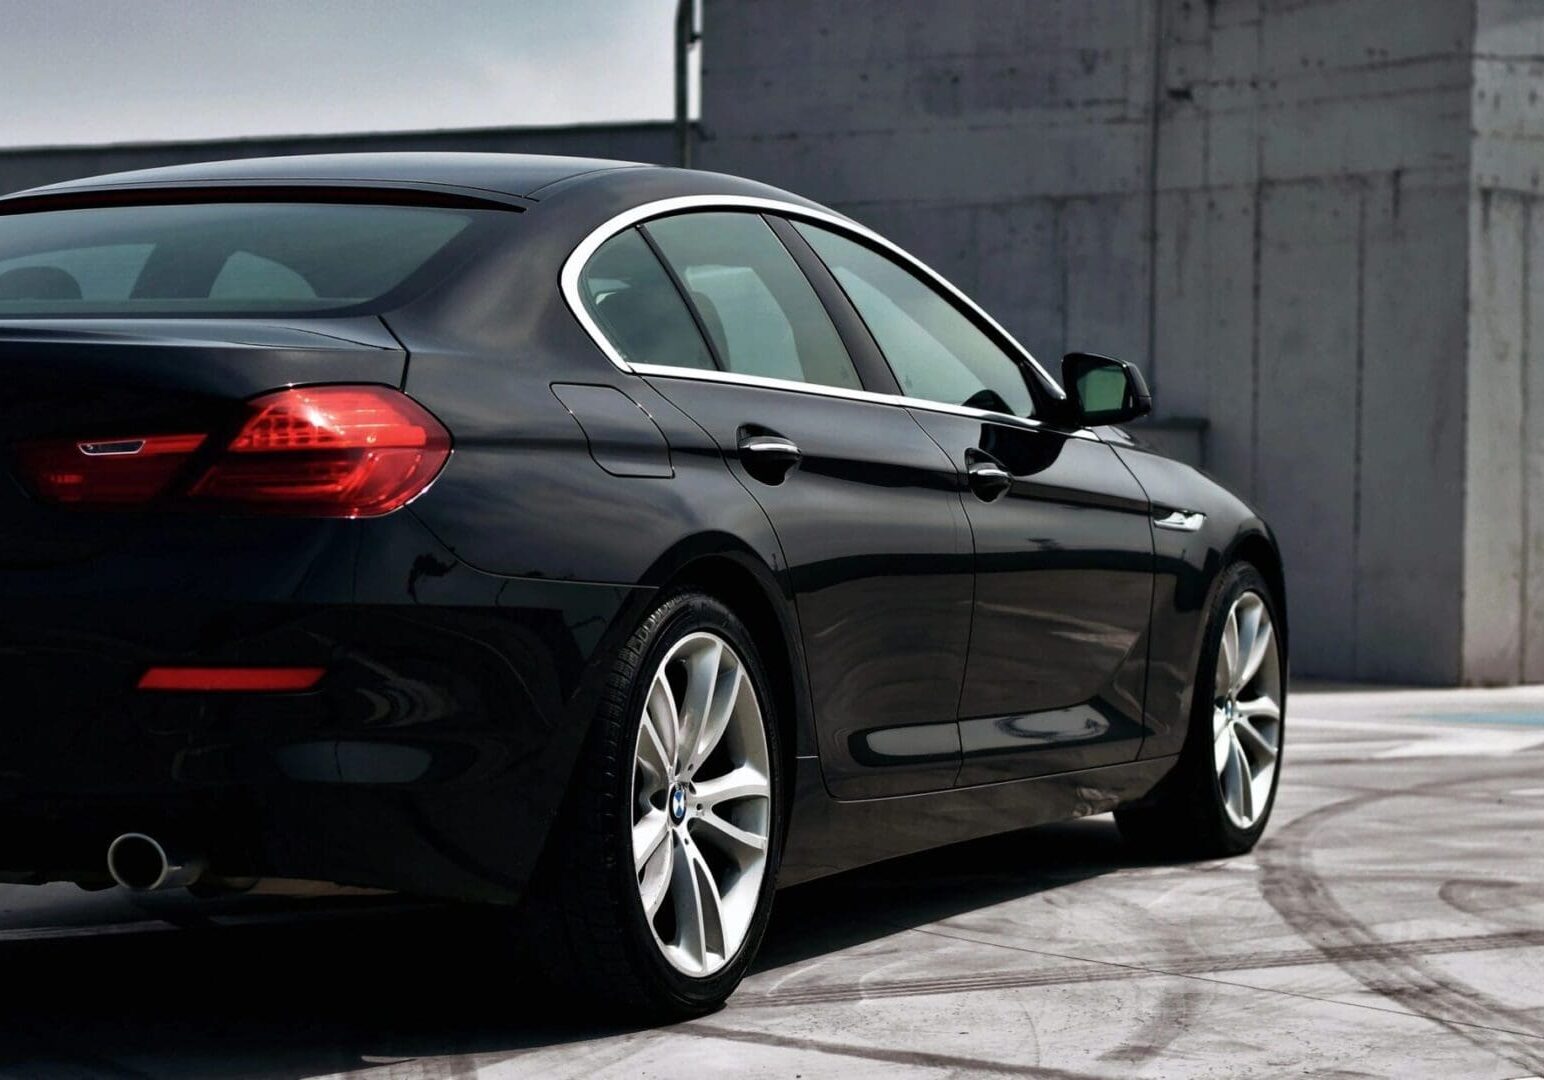 A black luxury sedan parked on a concrete area, showcasing its sleek design and shiny finish.